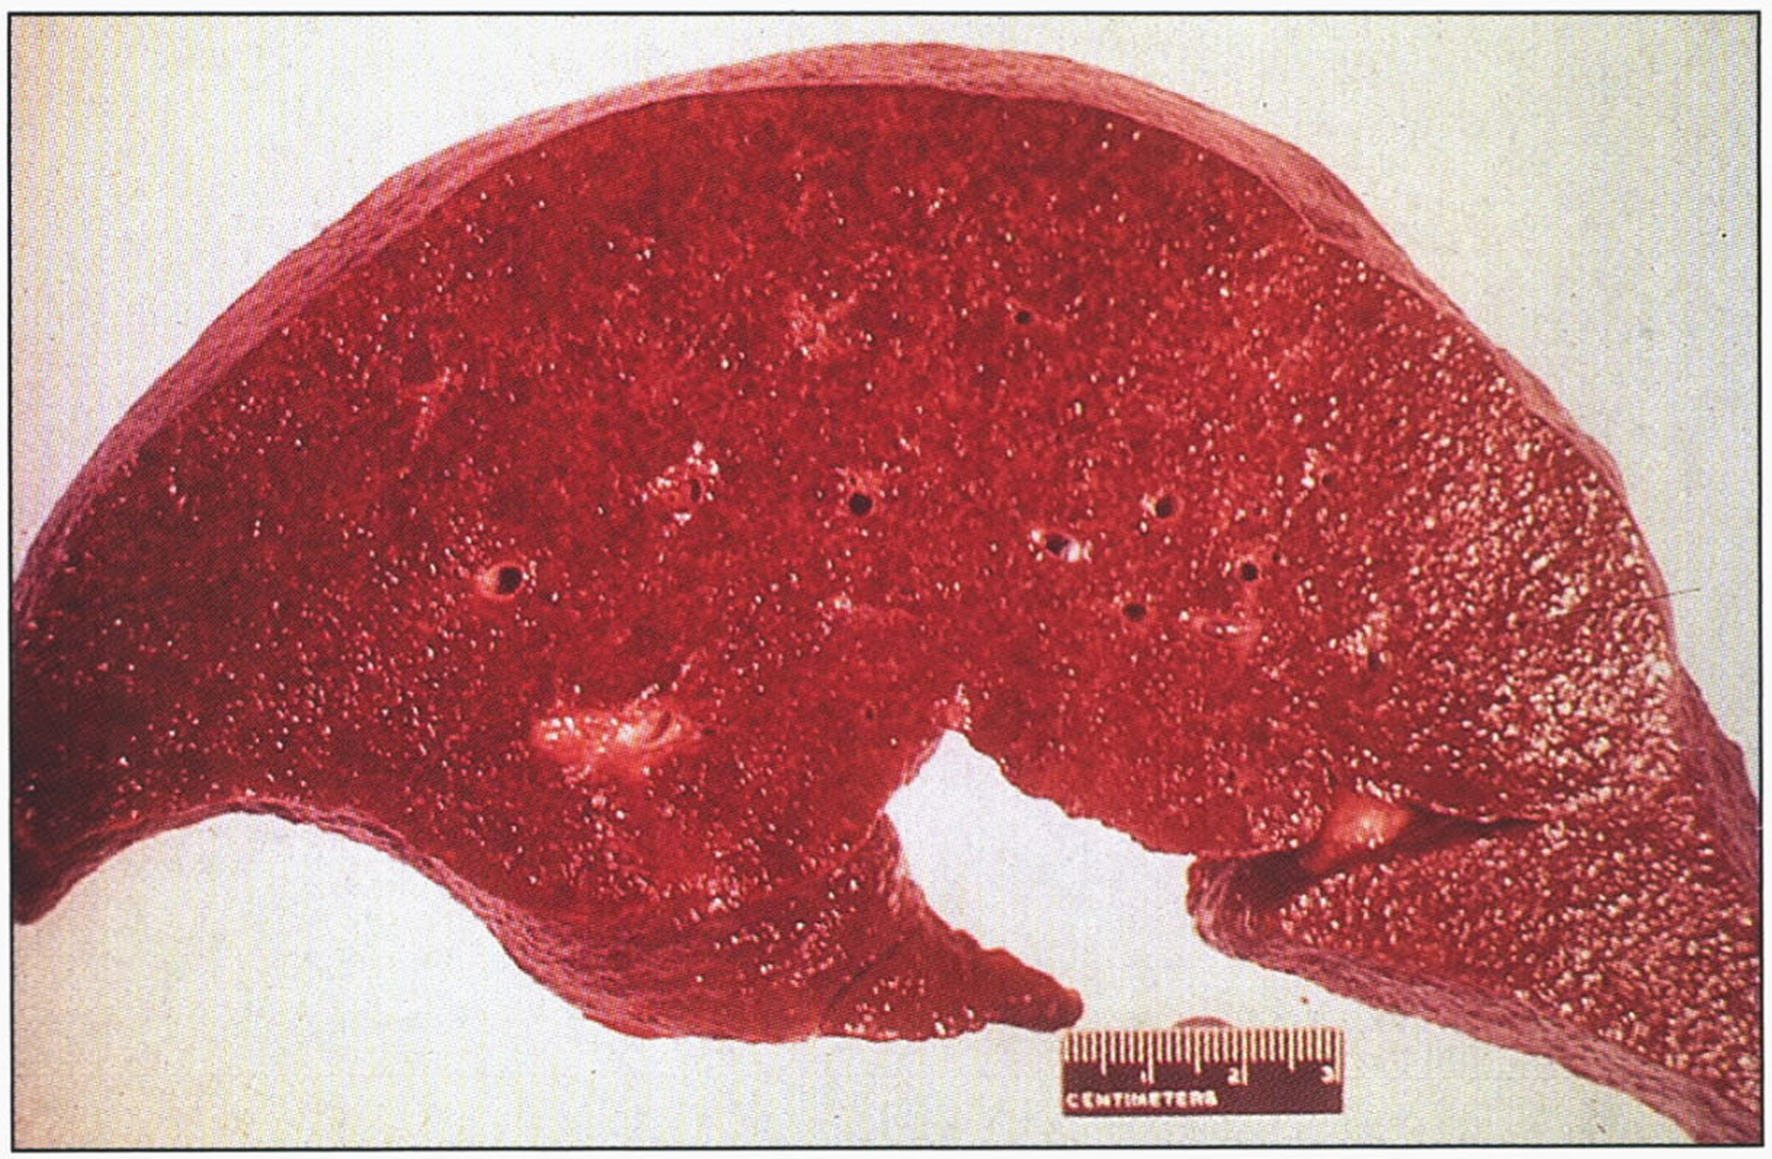 Hereditary hemochromatosis. Gross appearance of micronodular cirrhotic liver.